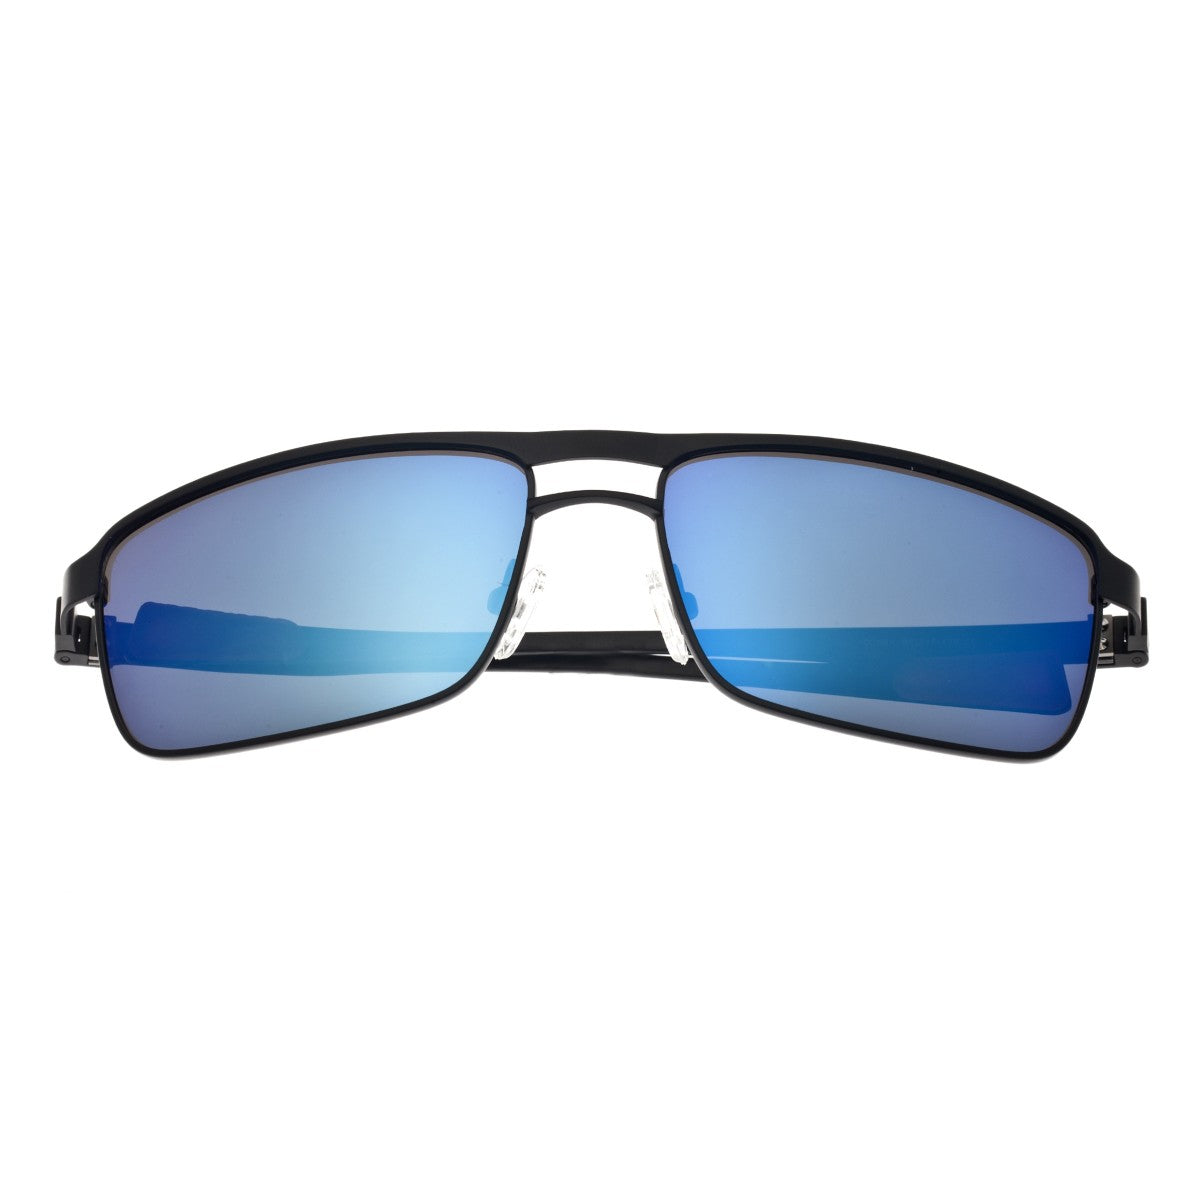 Breed Taurus Titanium and Carbon Fiber Polarized Sunglasses - Black/Blue - BSG005BK